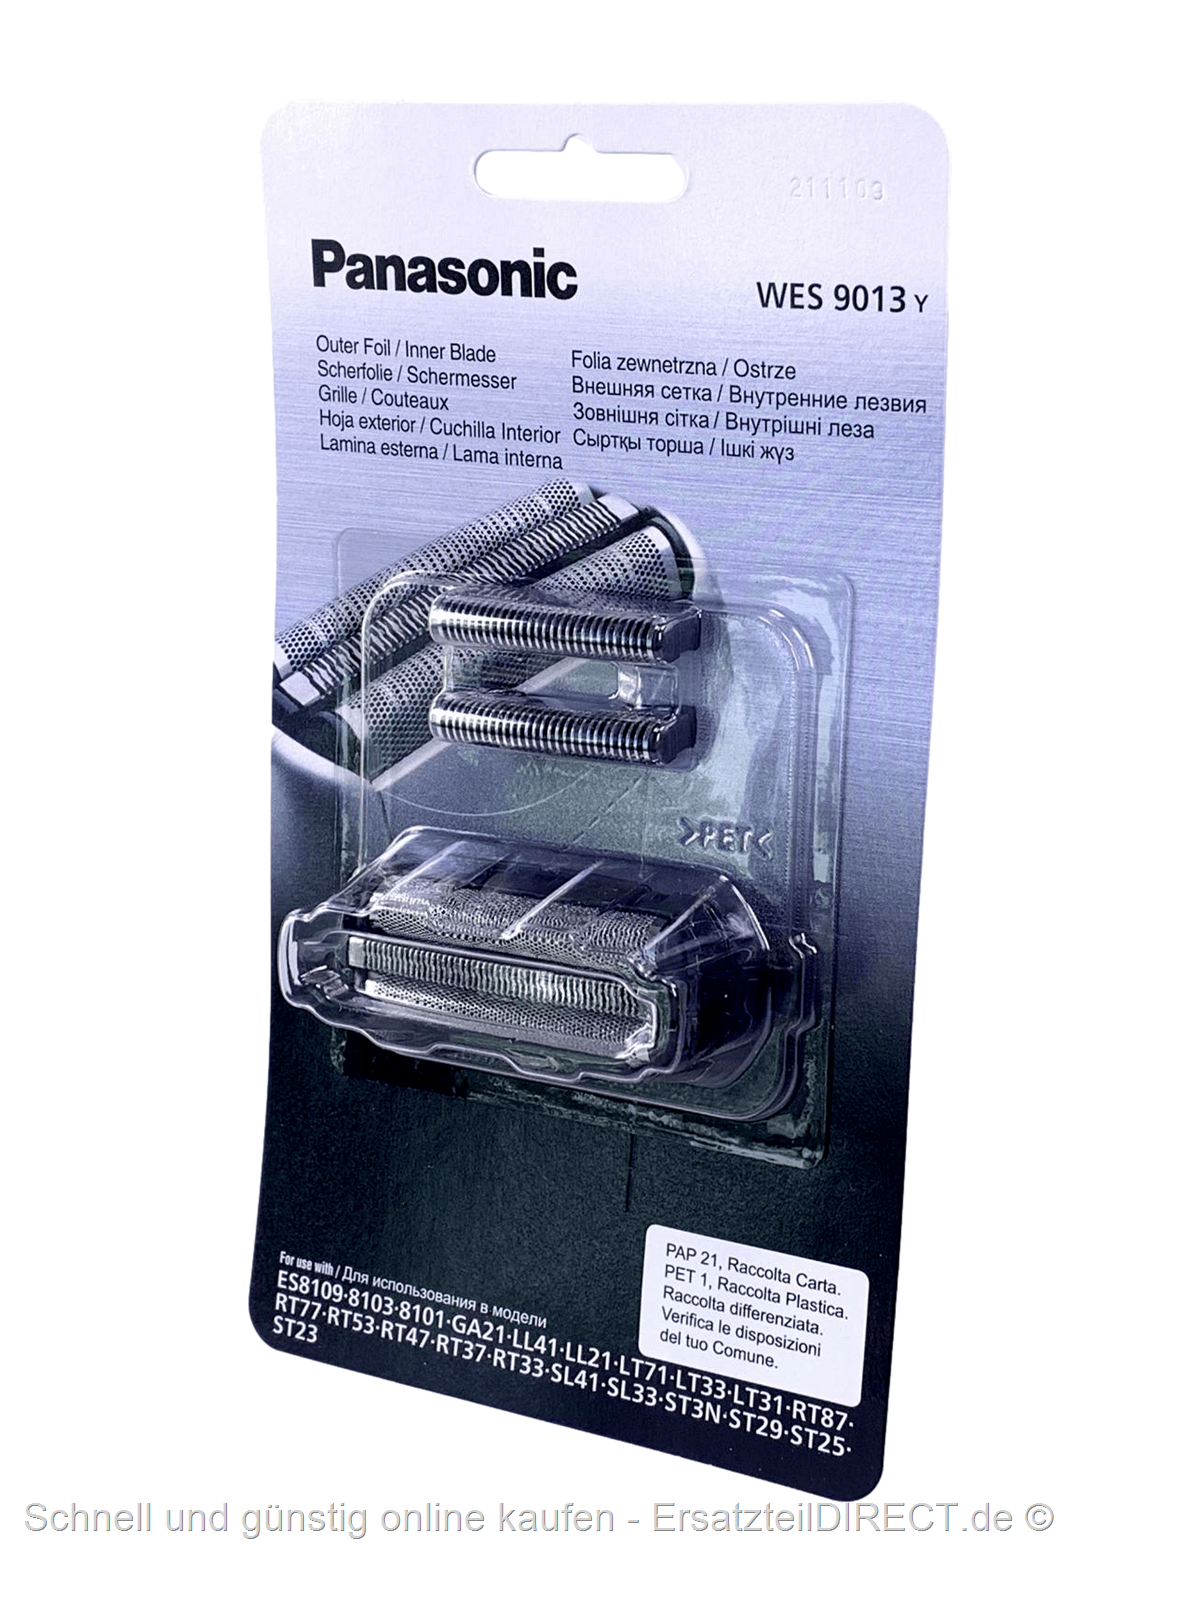 +Klingen Panasonic bei Scherfolien WES9013y WES9013 WES9013Y günstig kaufen Kombipack